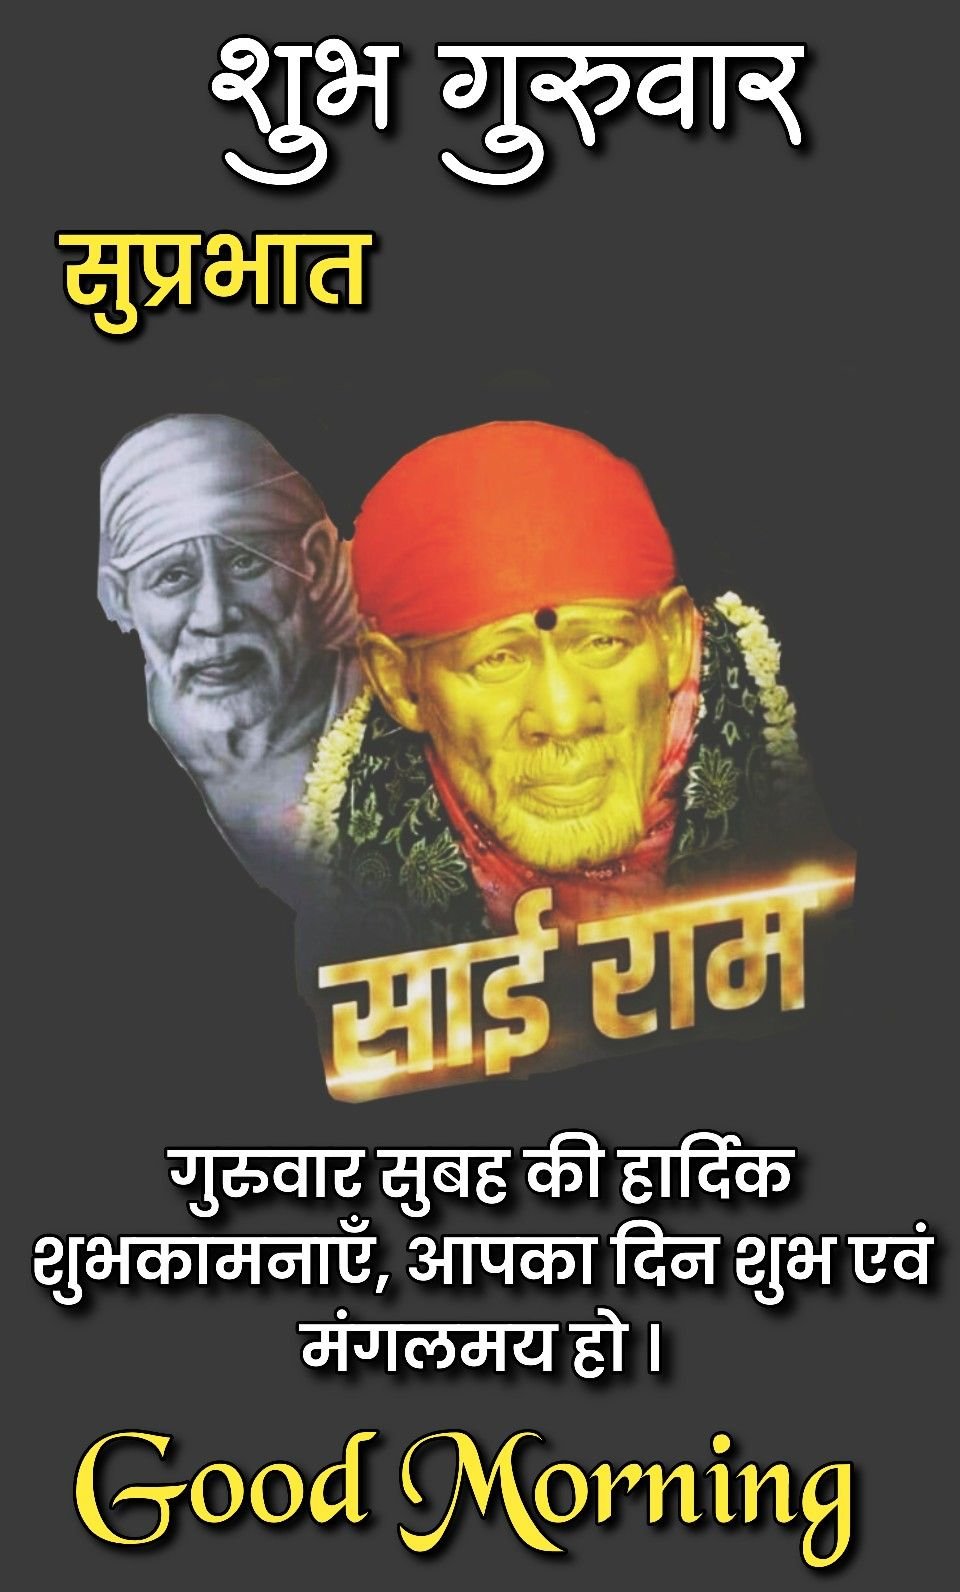 Shirdi Sai Baba Images With Quotes In Hindi